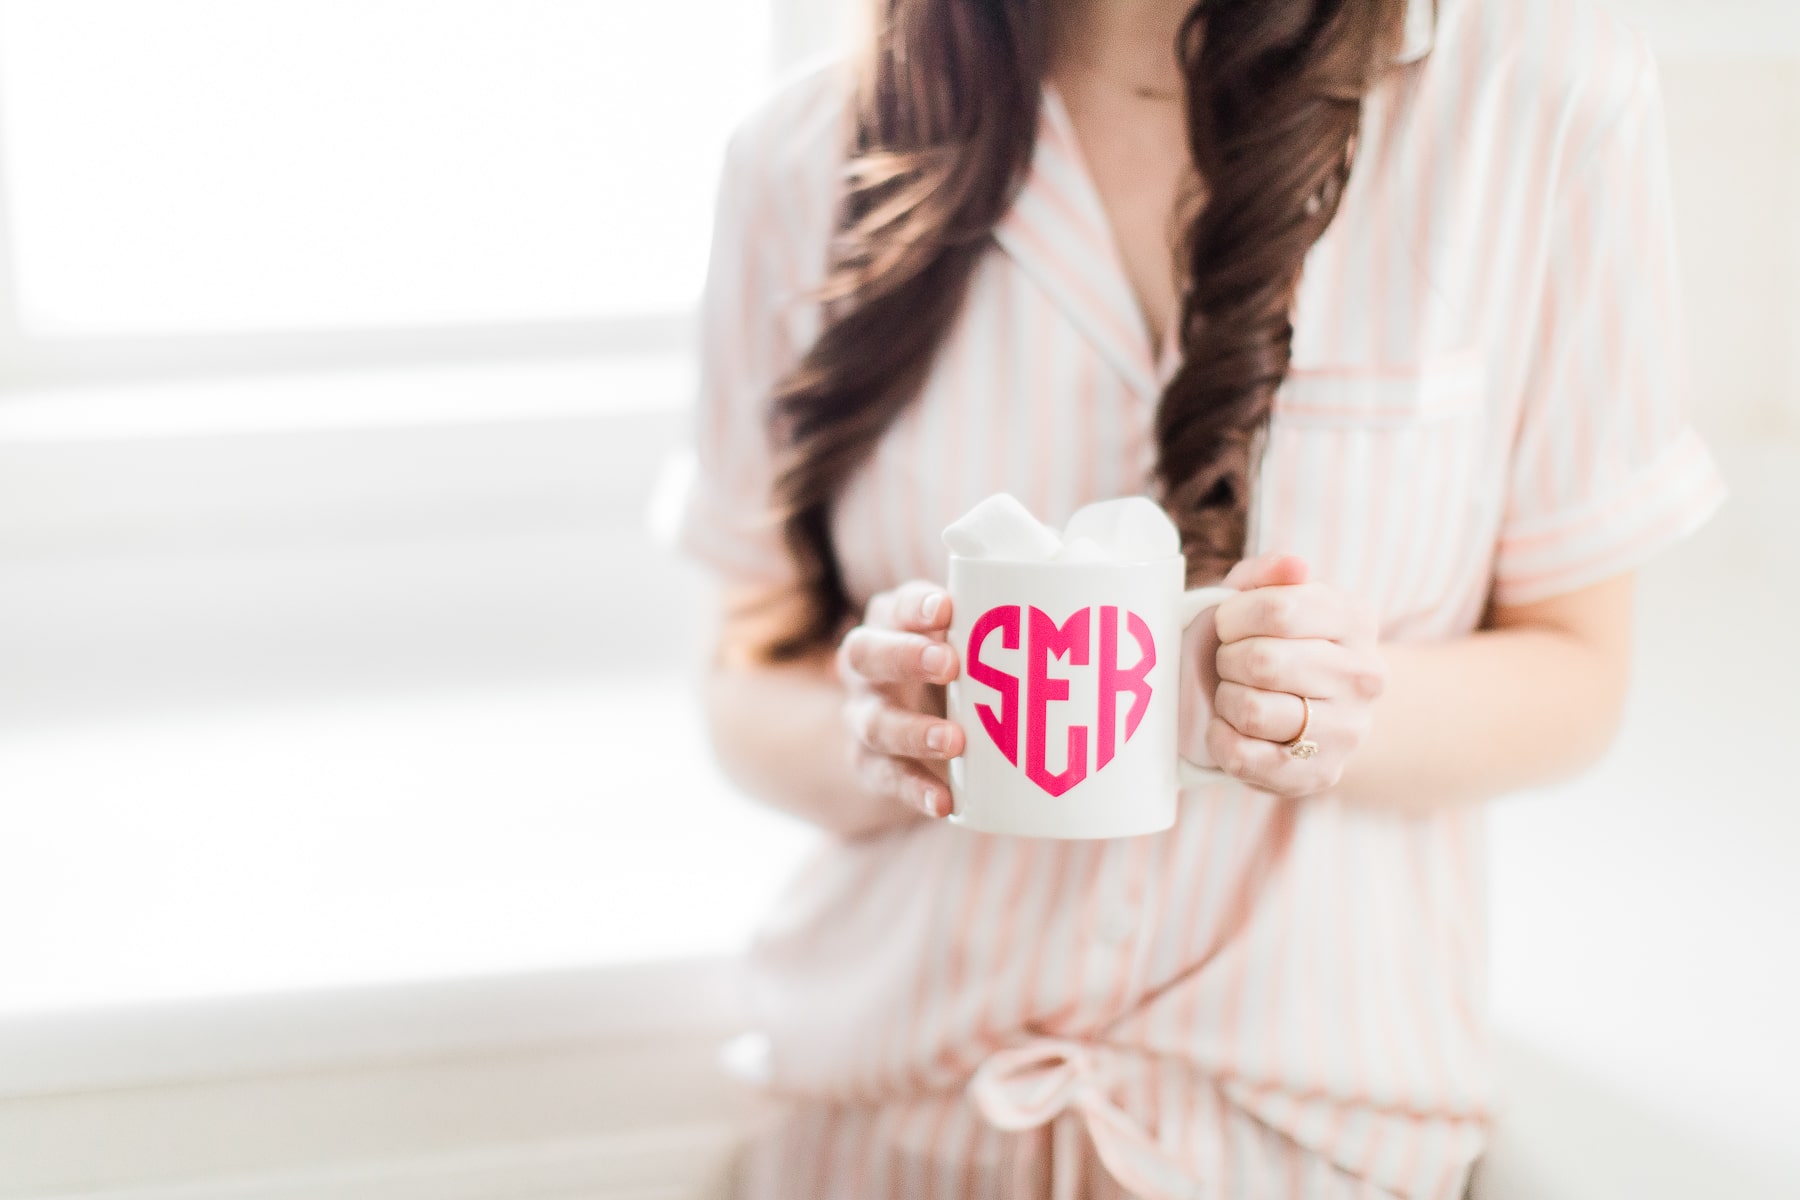 DIY coffee mug decorating idea by DIY blogger Stephanie Ziajka of Diary of a Debutante